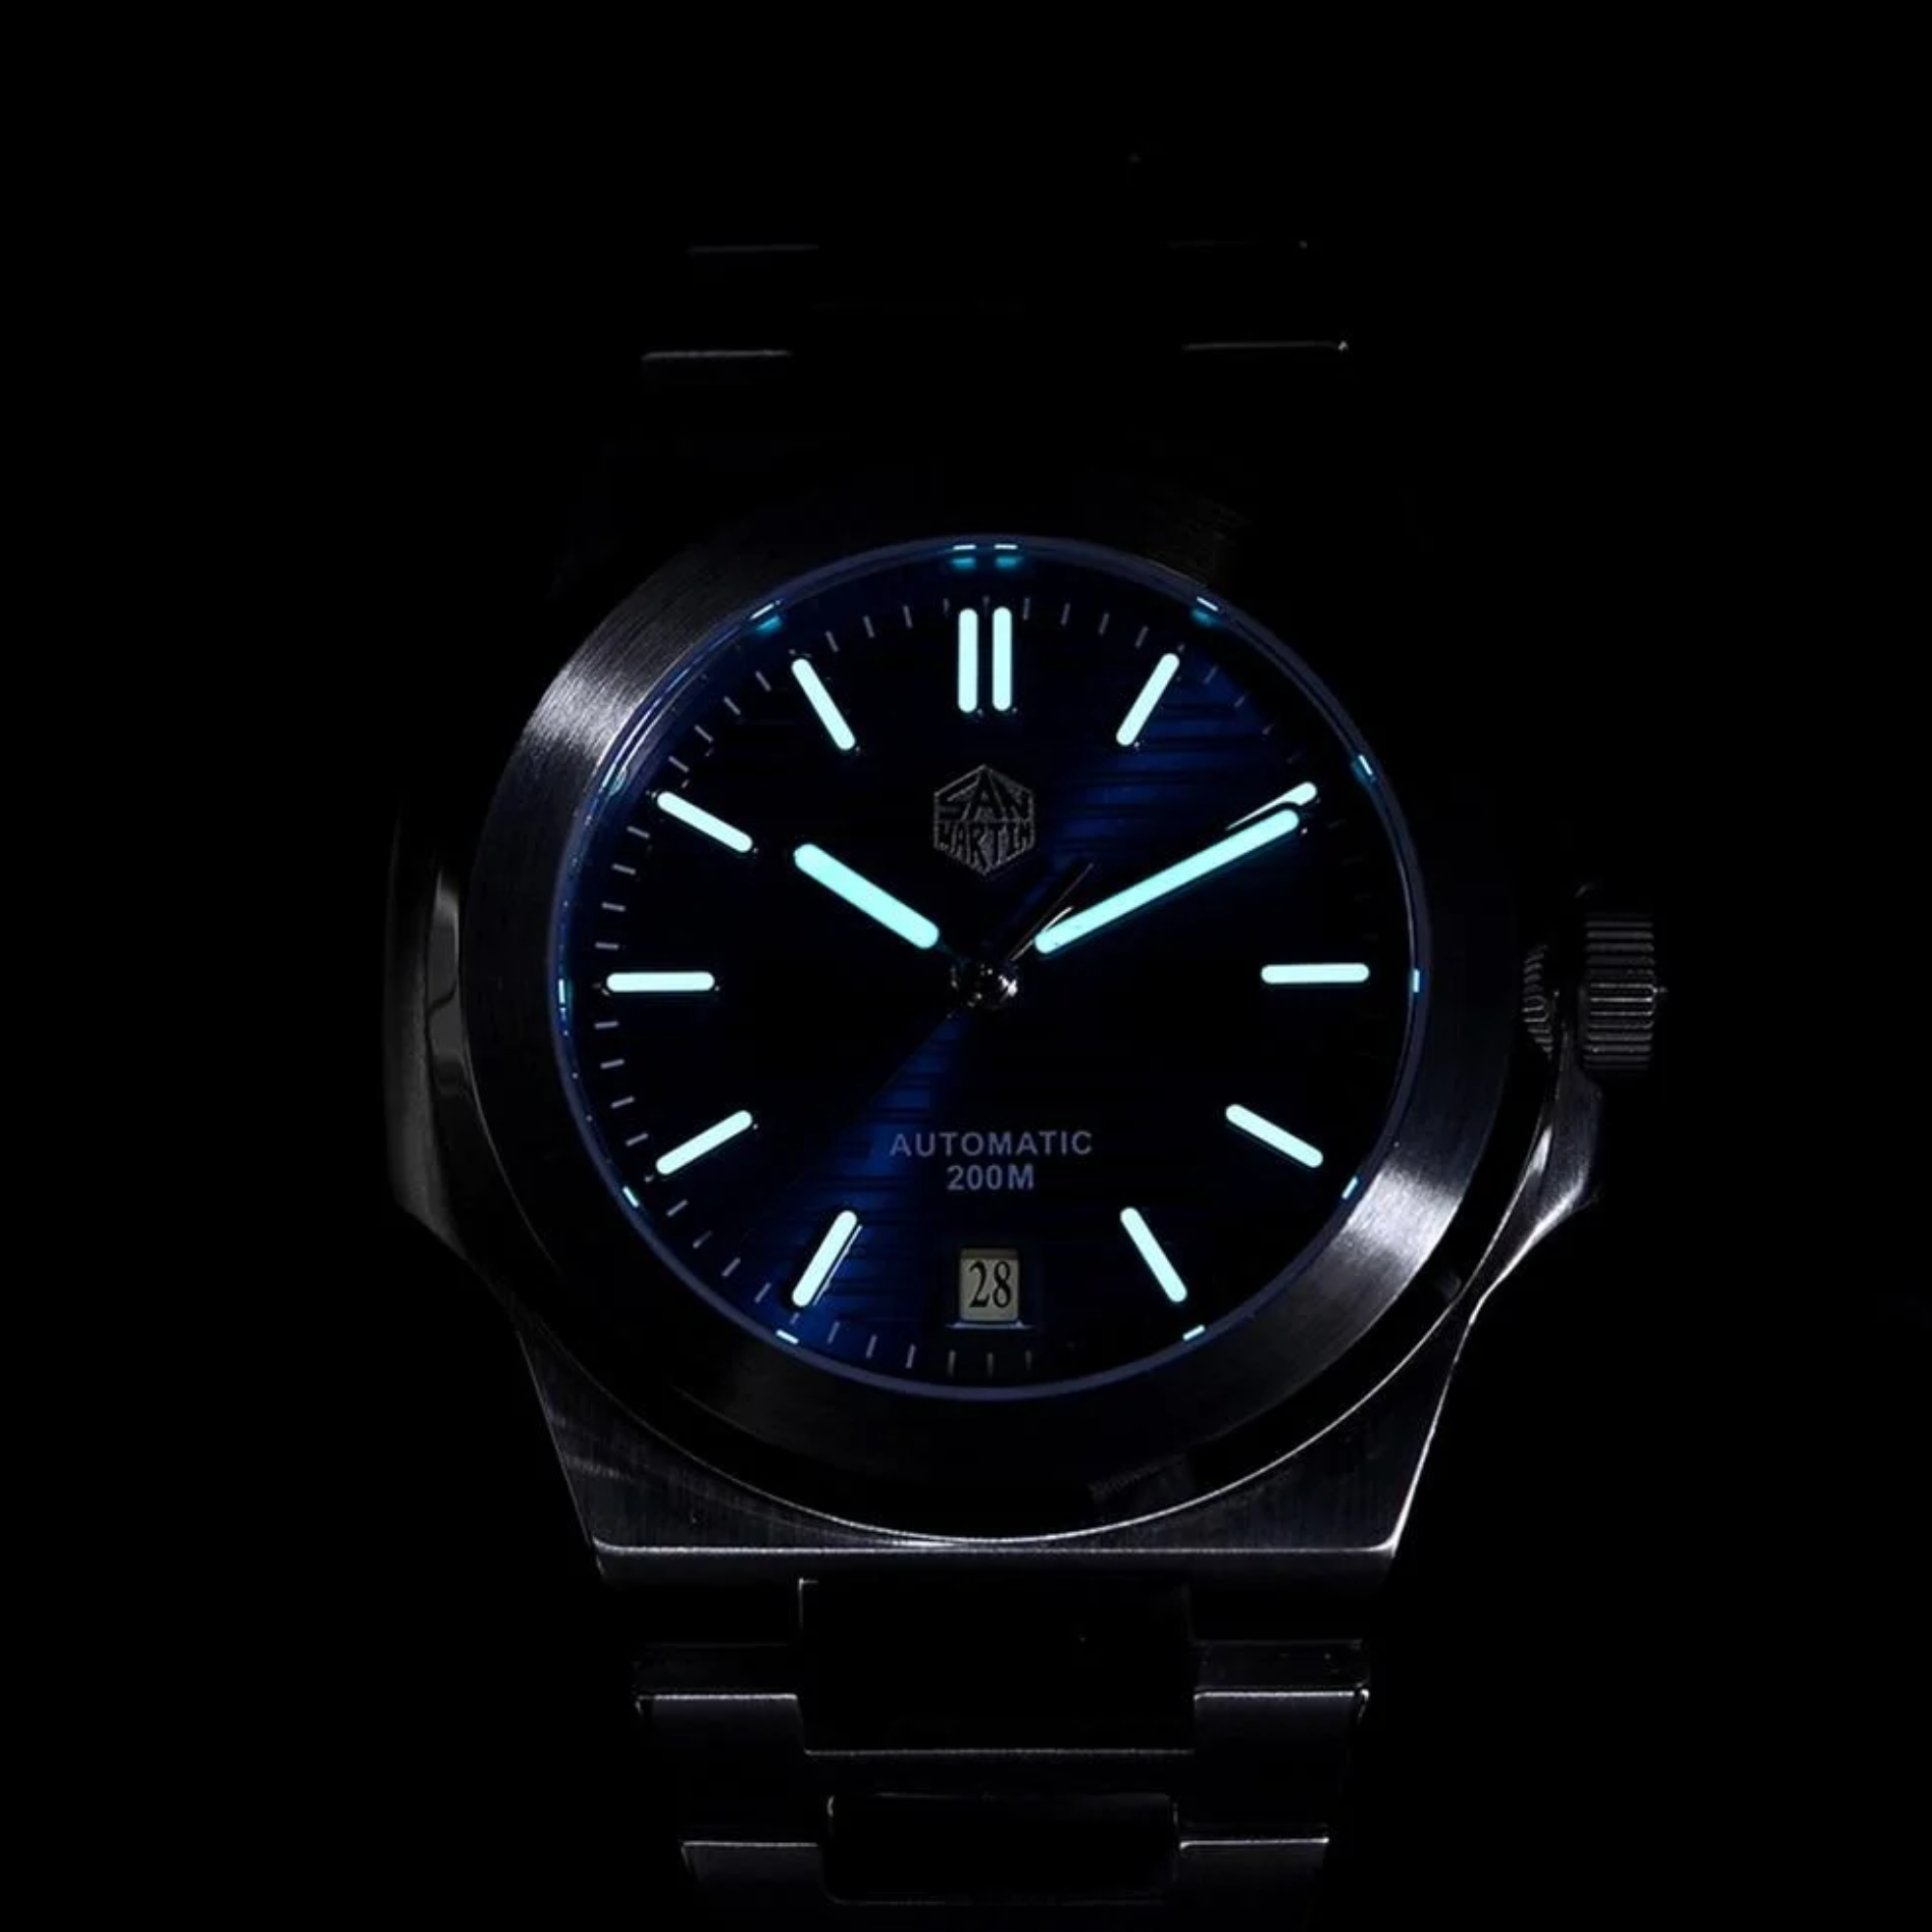 San Martin Diver Retro Luxury Men Watch SN076G V2 - Sunburst Blue